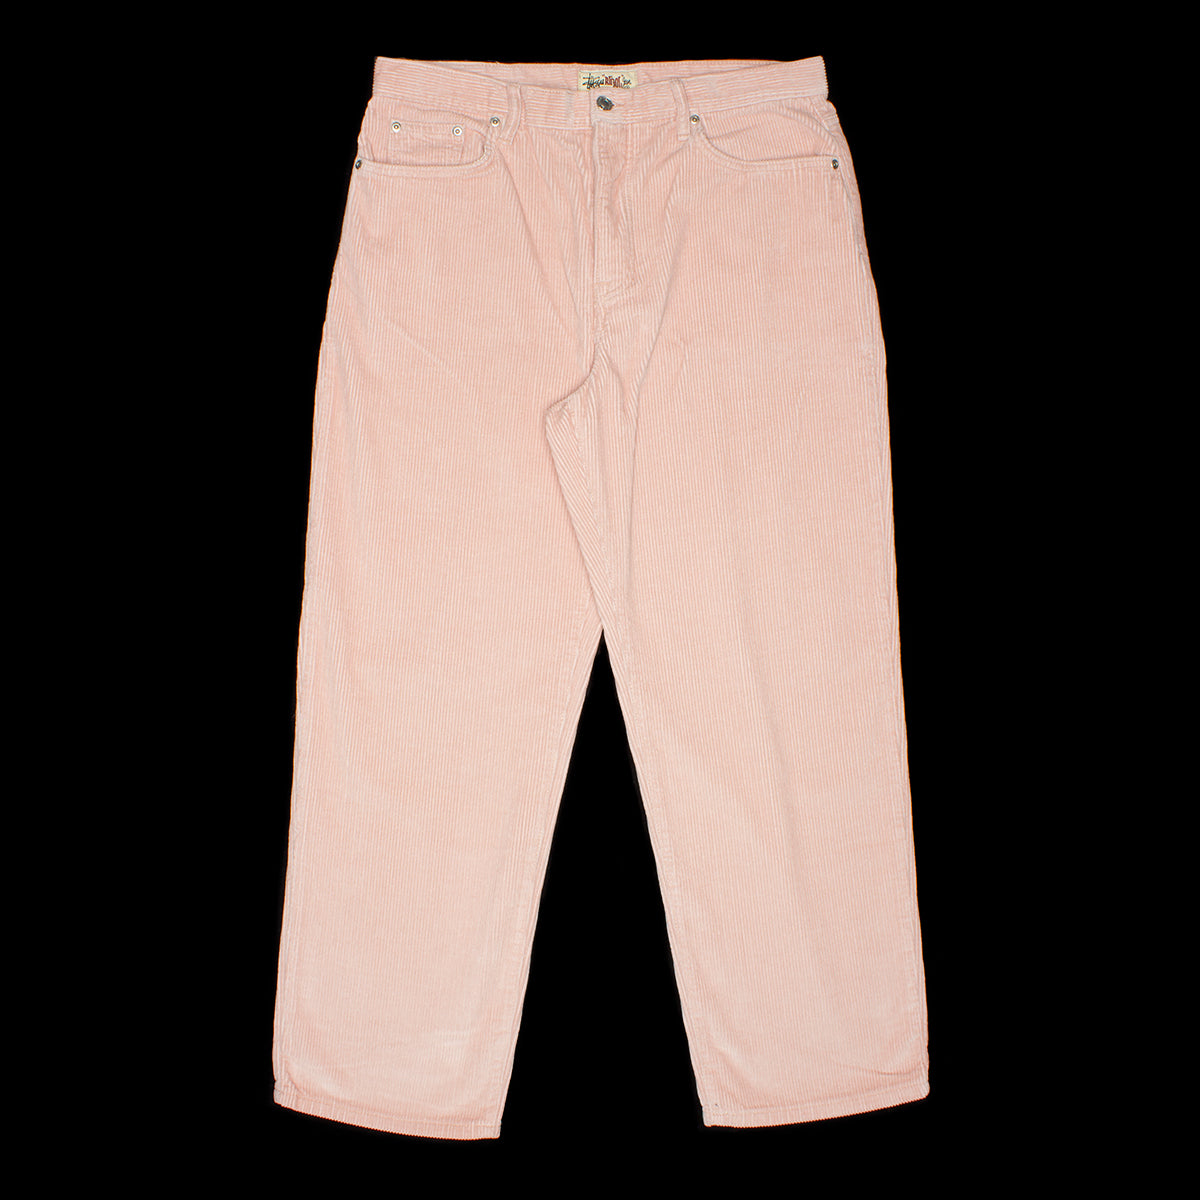 Stussy Corduroy Big Ol' Jeans - Washed Pink